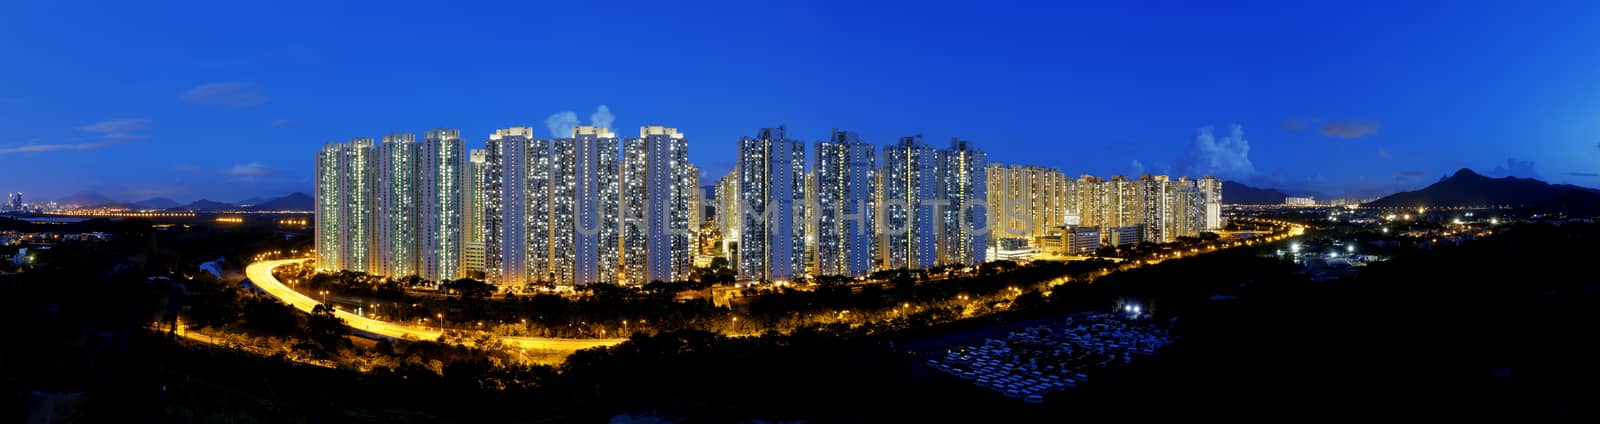 Public Estate in Hong Kong at night